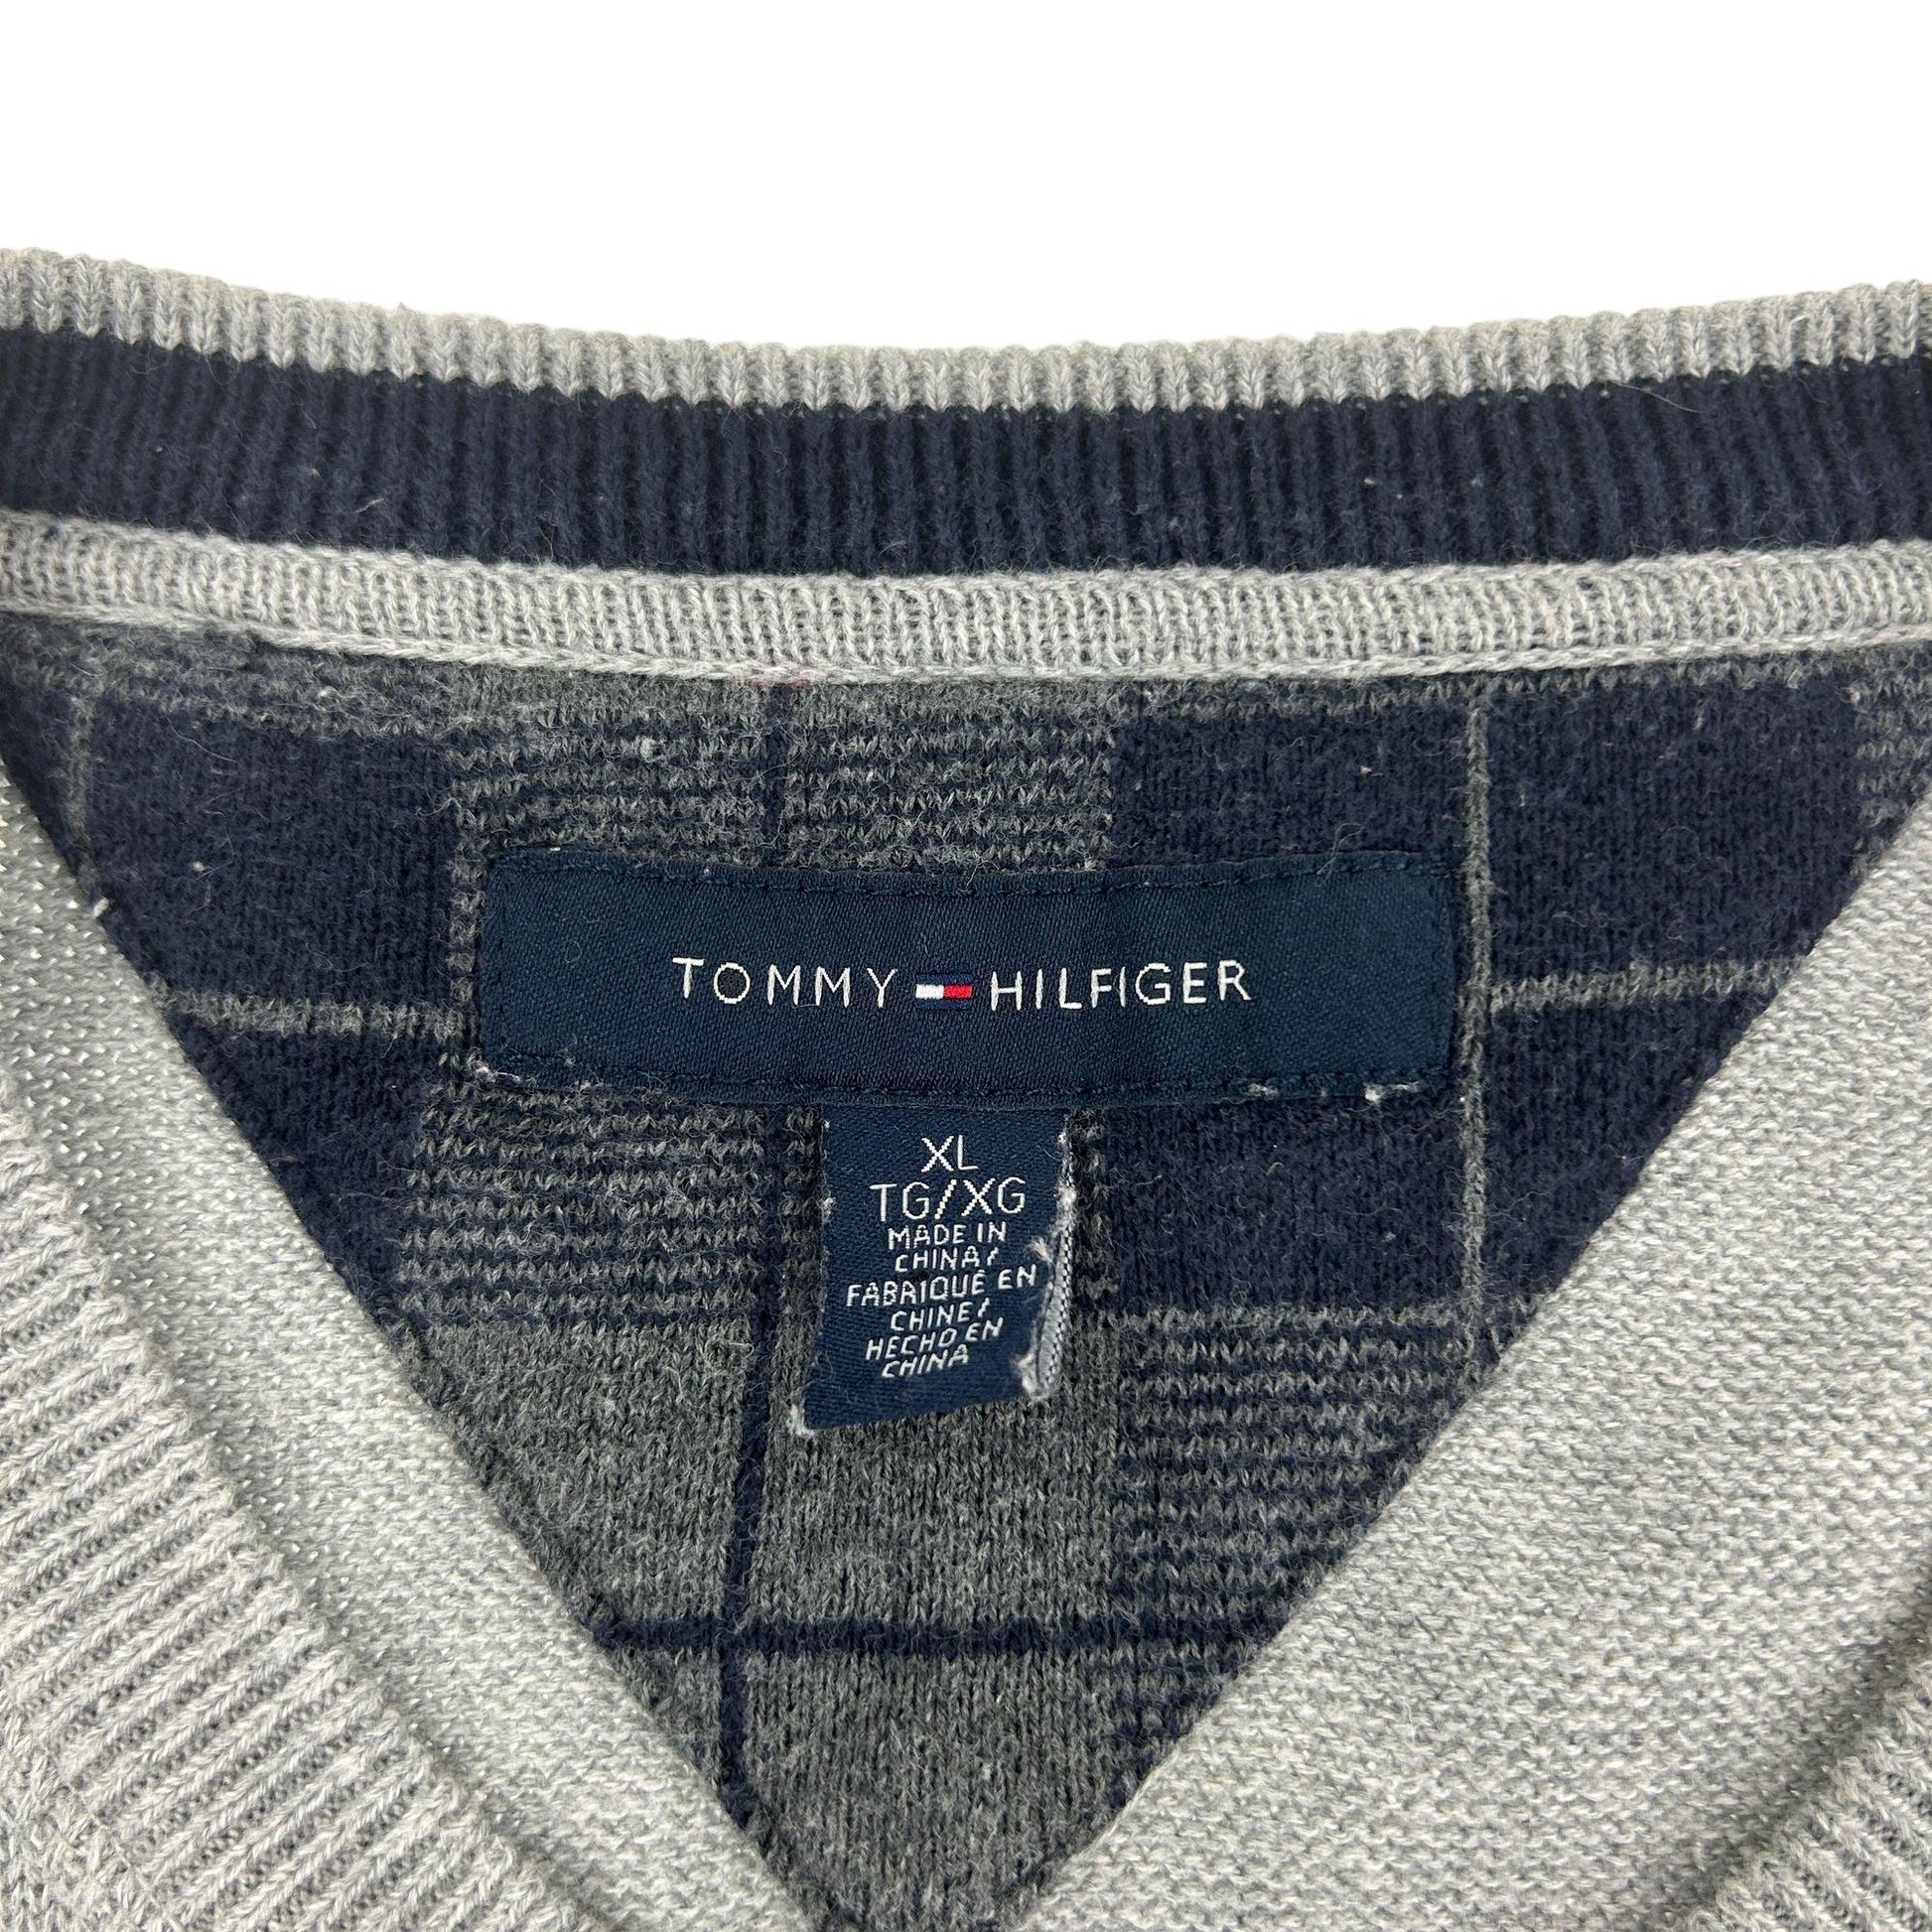 Vintage Tommy Hilfiger Knitted Jumper Size L - Known Source